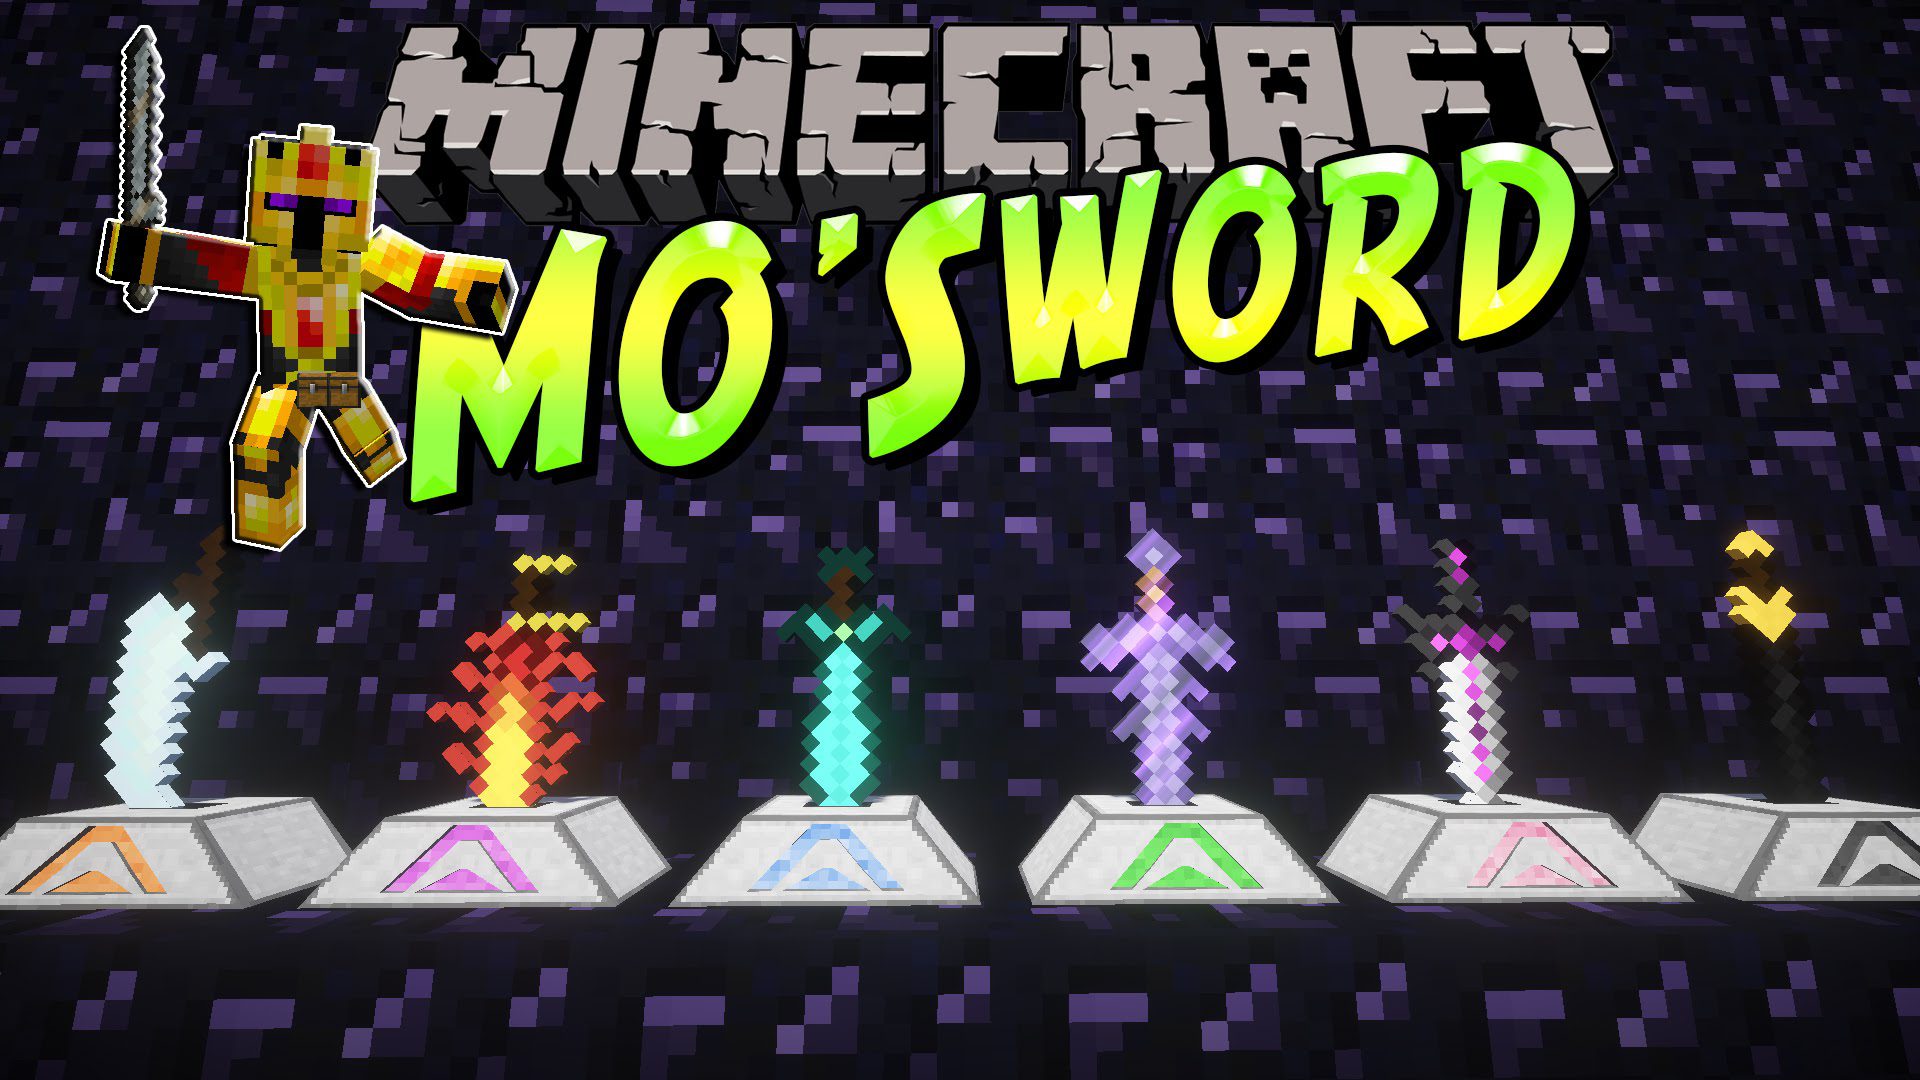 Sword 1.12.2 Minecraft Mods